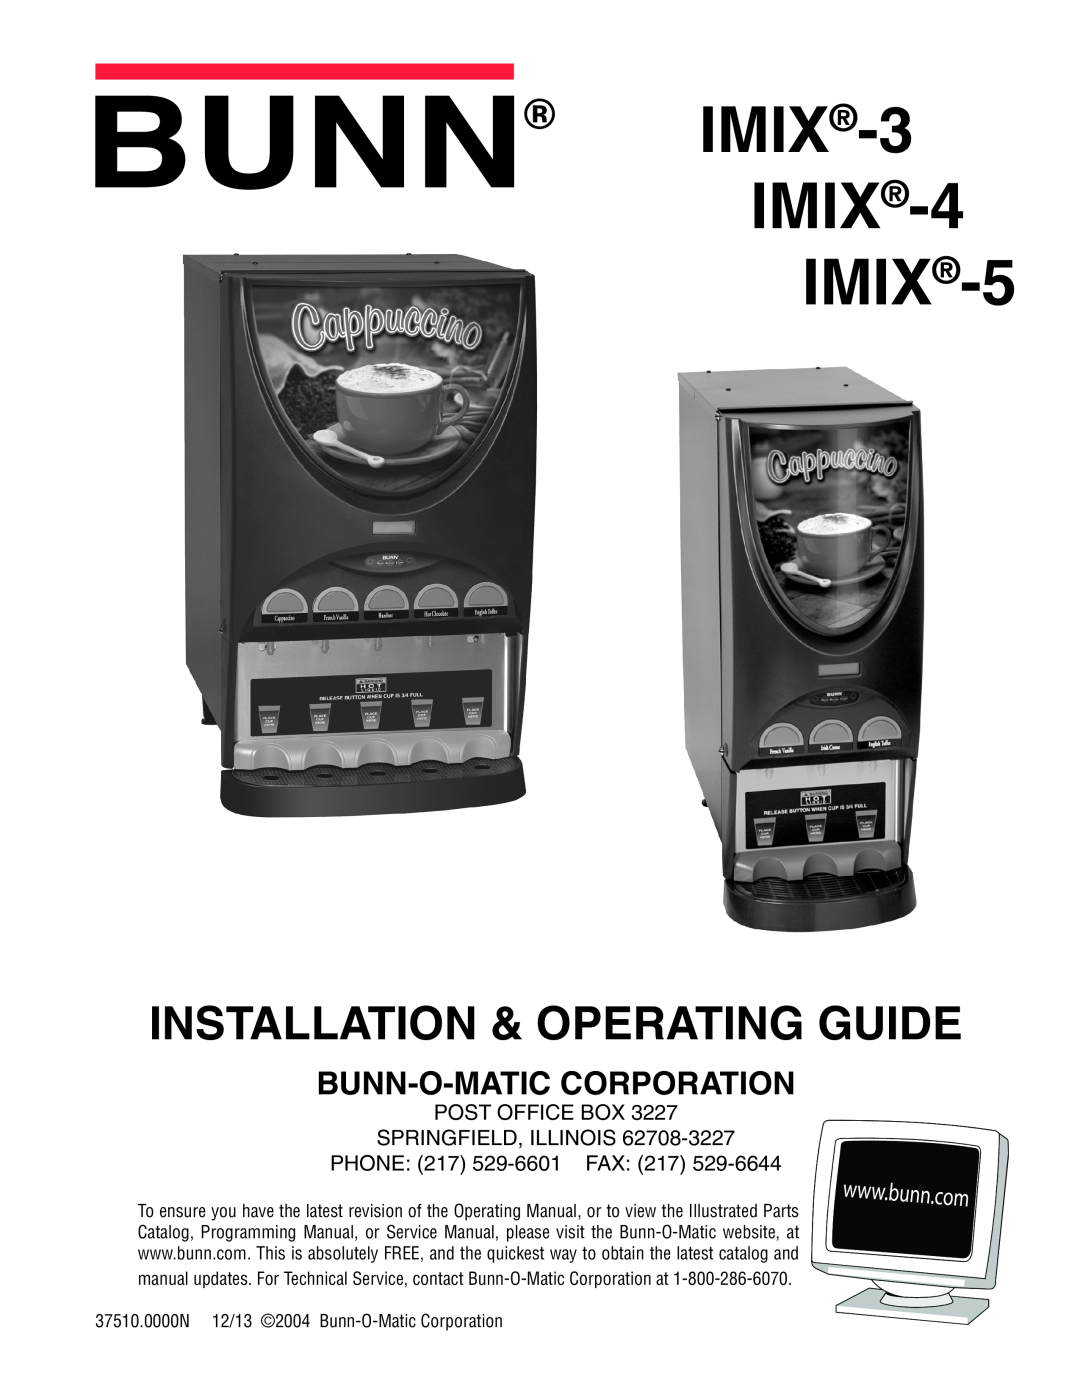 Bunn specifications IMIX-4 IMIX-5, Illustrated Parts Catalog, Bunn-O-Maticcorporation 